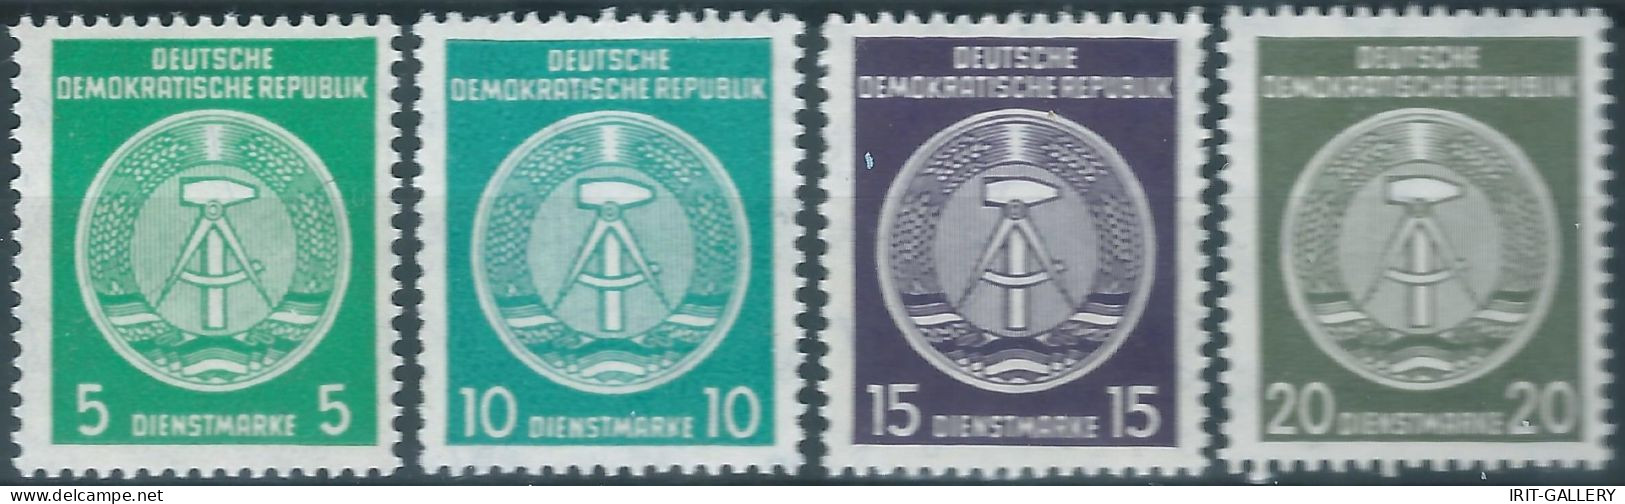 Germany-Deutschland,1954 /1956 Eastern Democratic Republic,DDR ,Service,MNH - Postfris